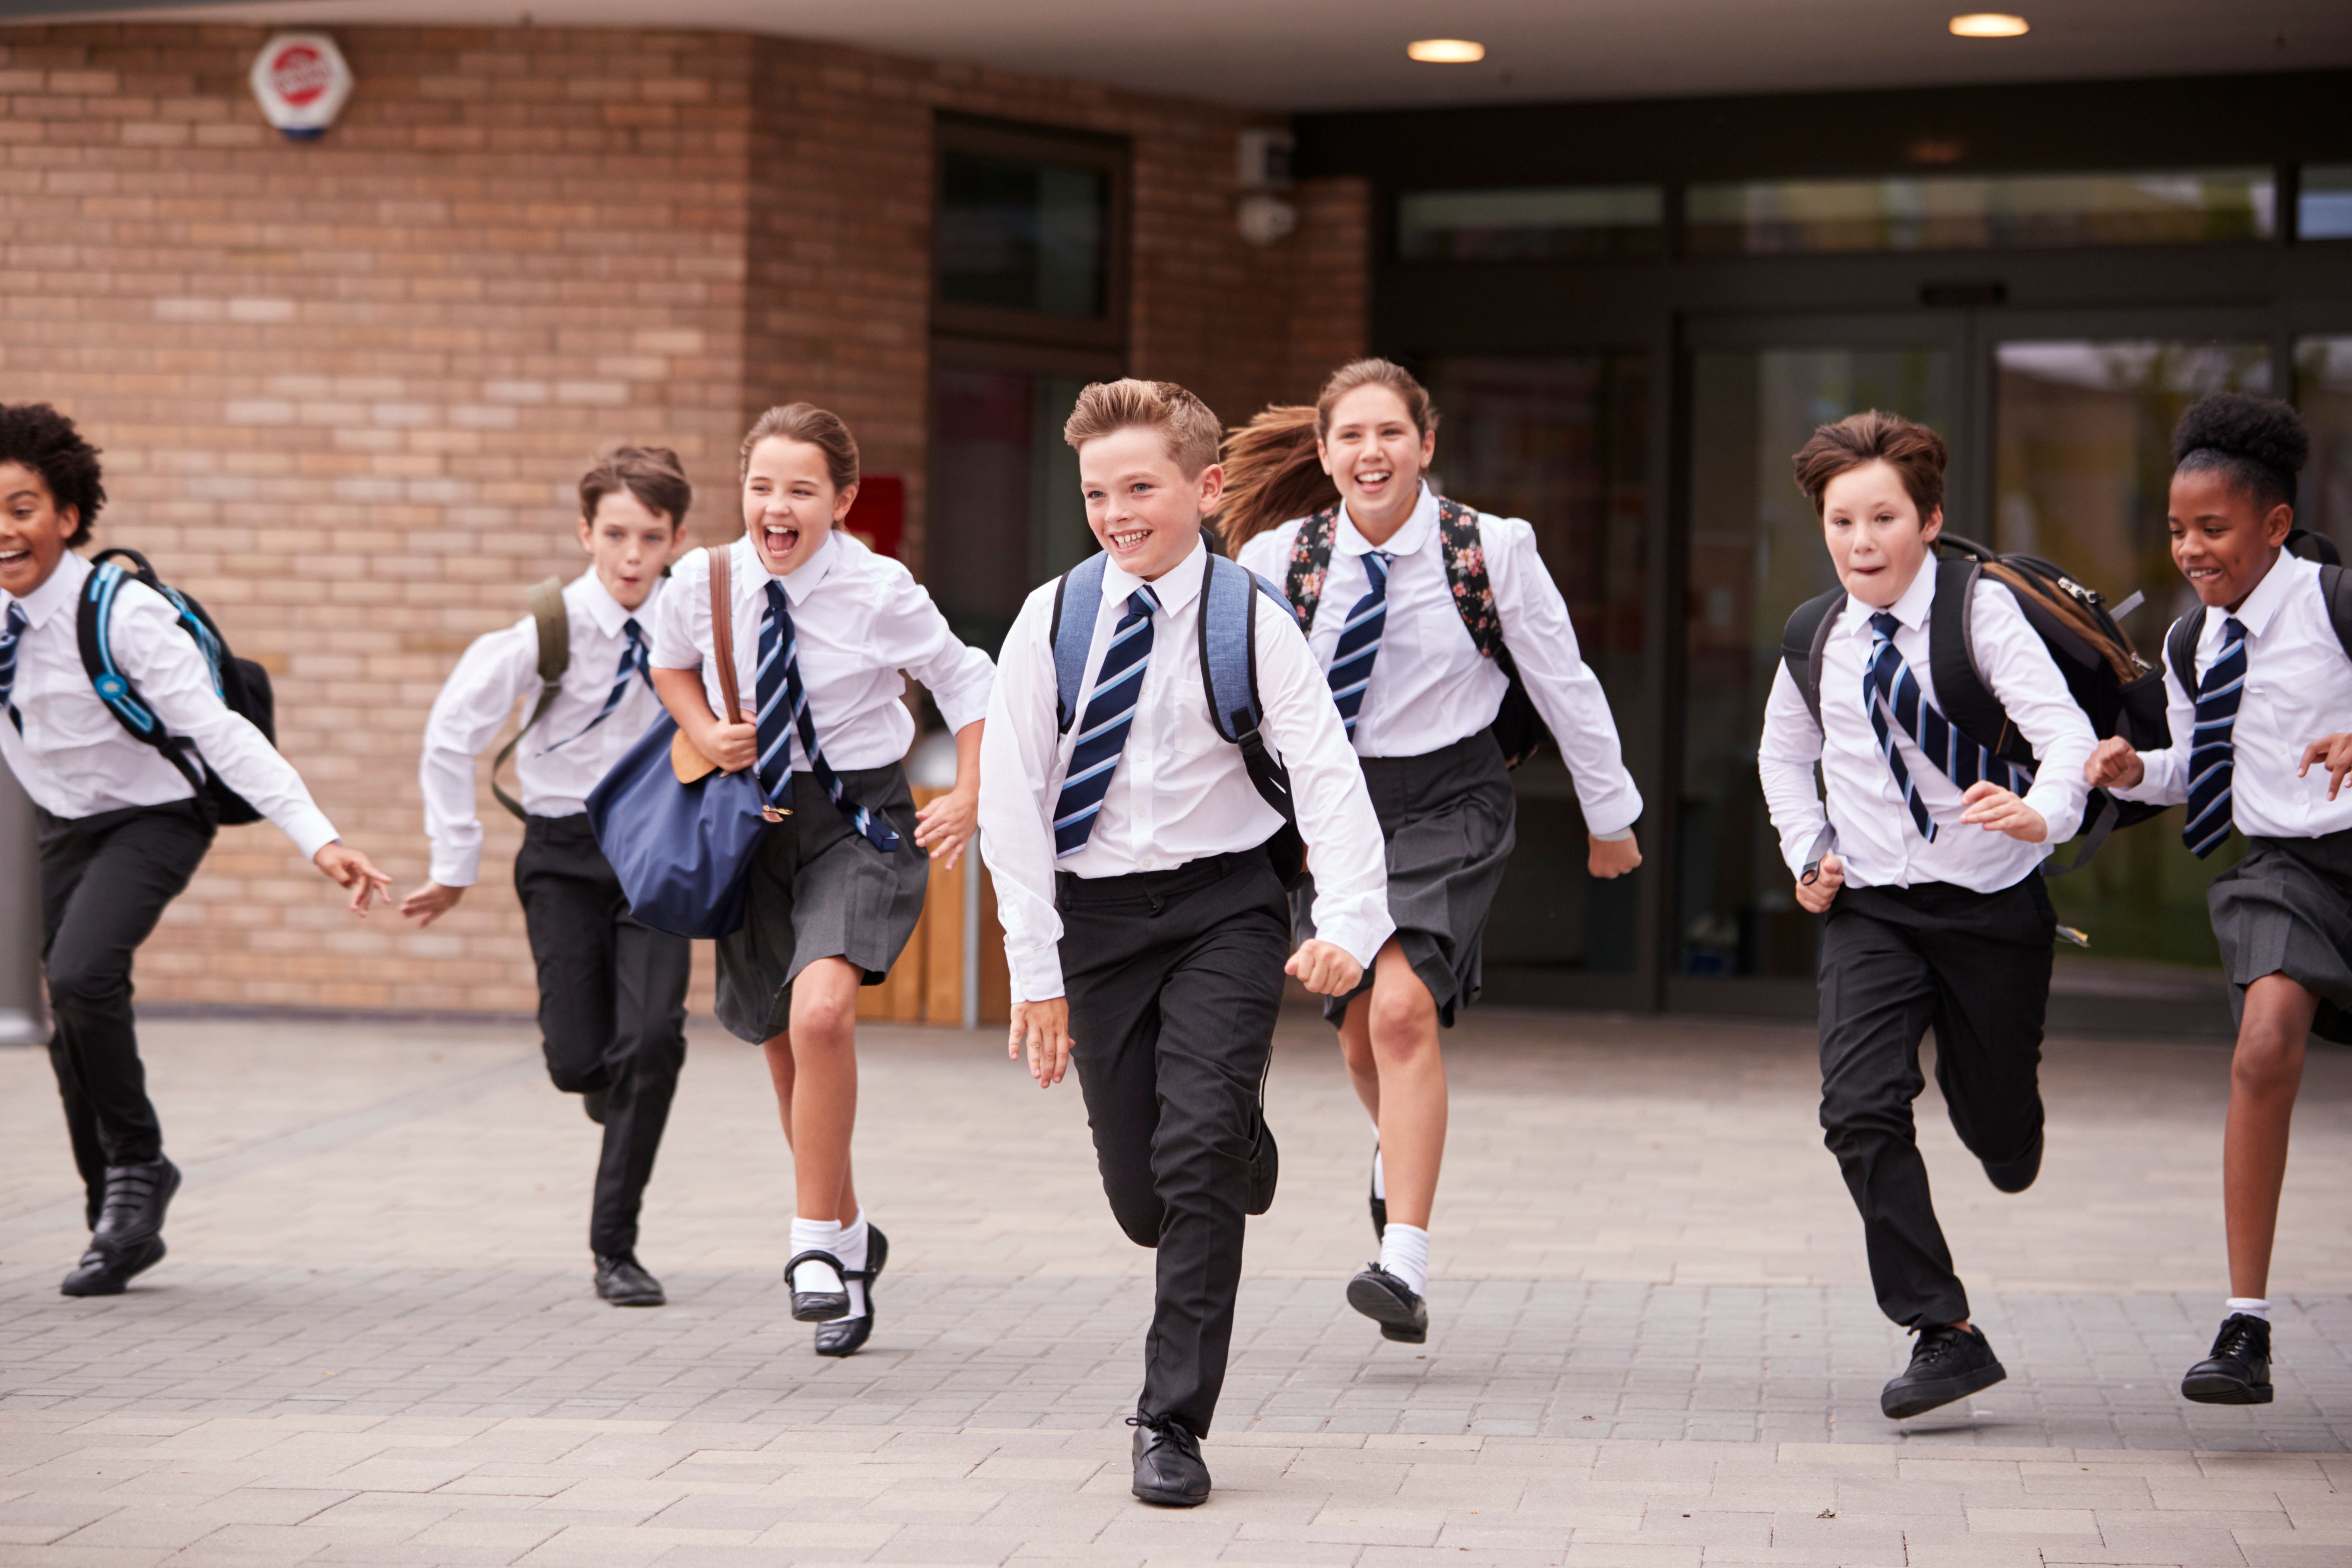 Schüler rennen vor der Schule. | Quelle: Shutterstock